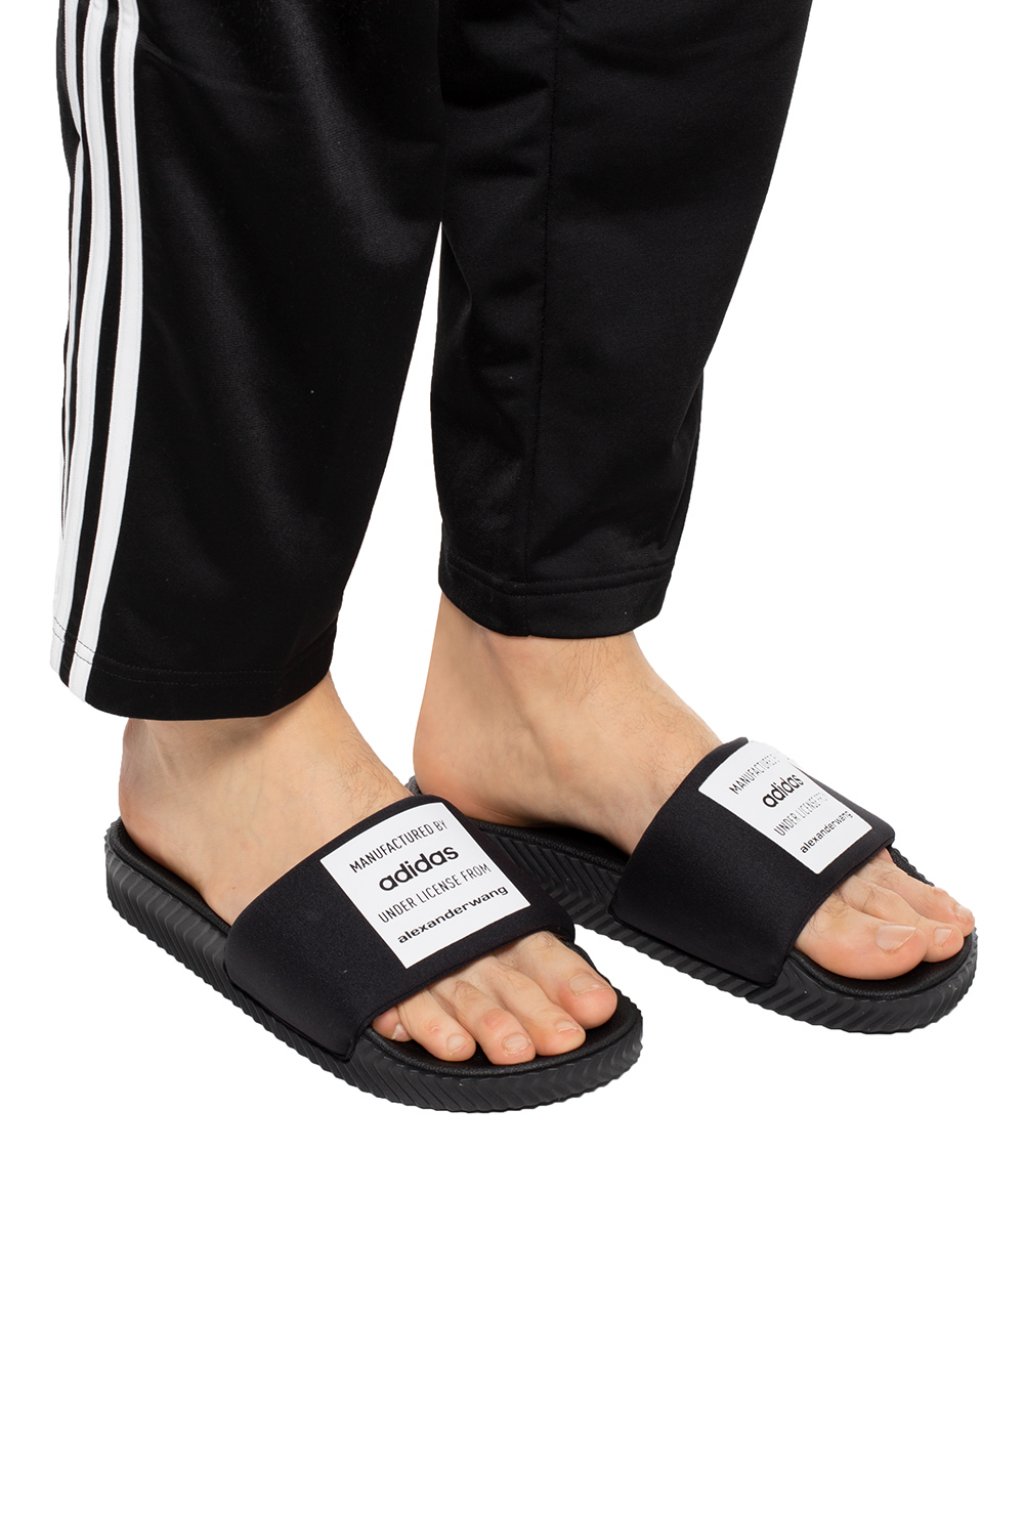 alexander wang adidas slippers